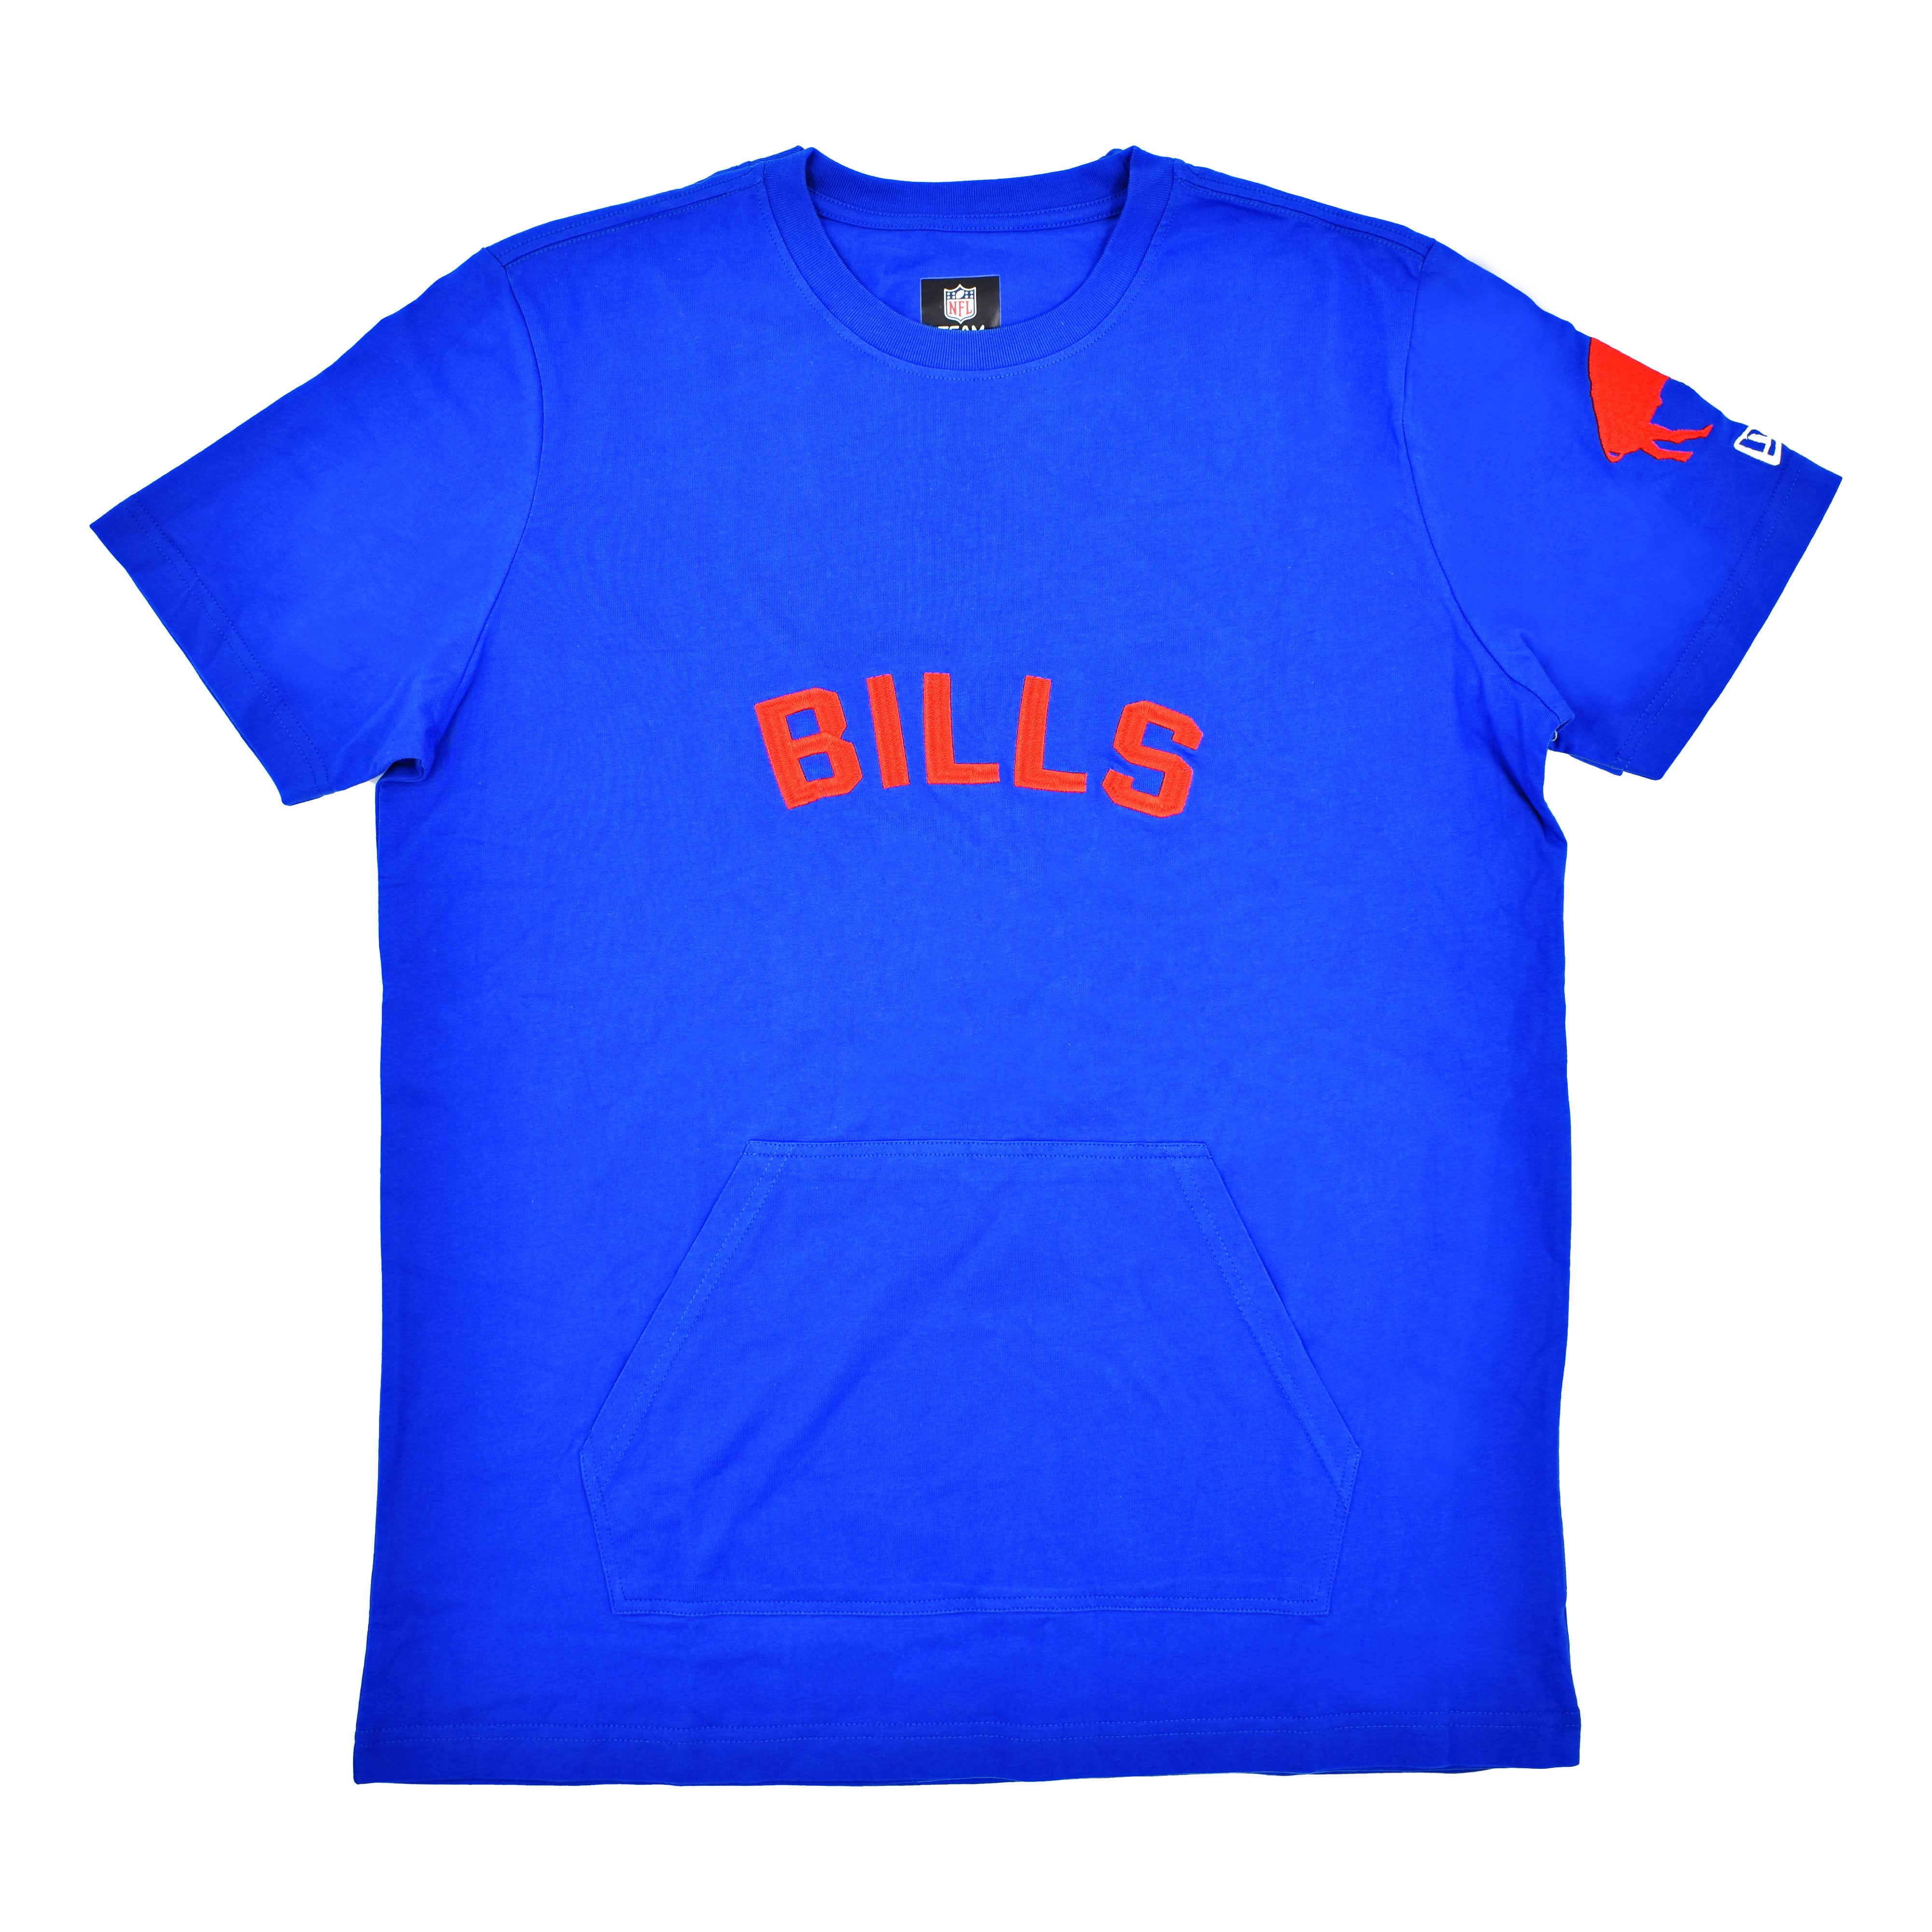 Buffalo Bills With Store Standing | – BFLO BFLO The Store Shirt Short Buffalo Sleeve